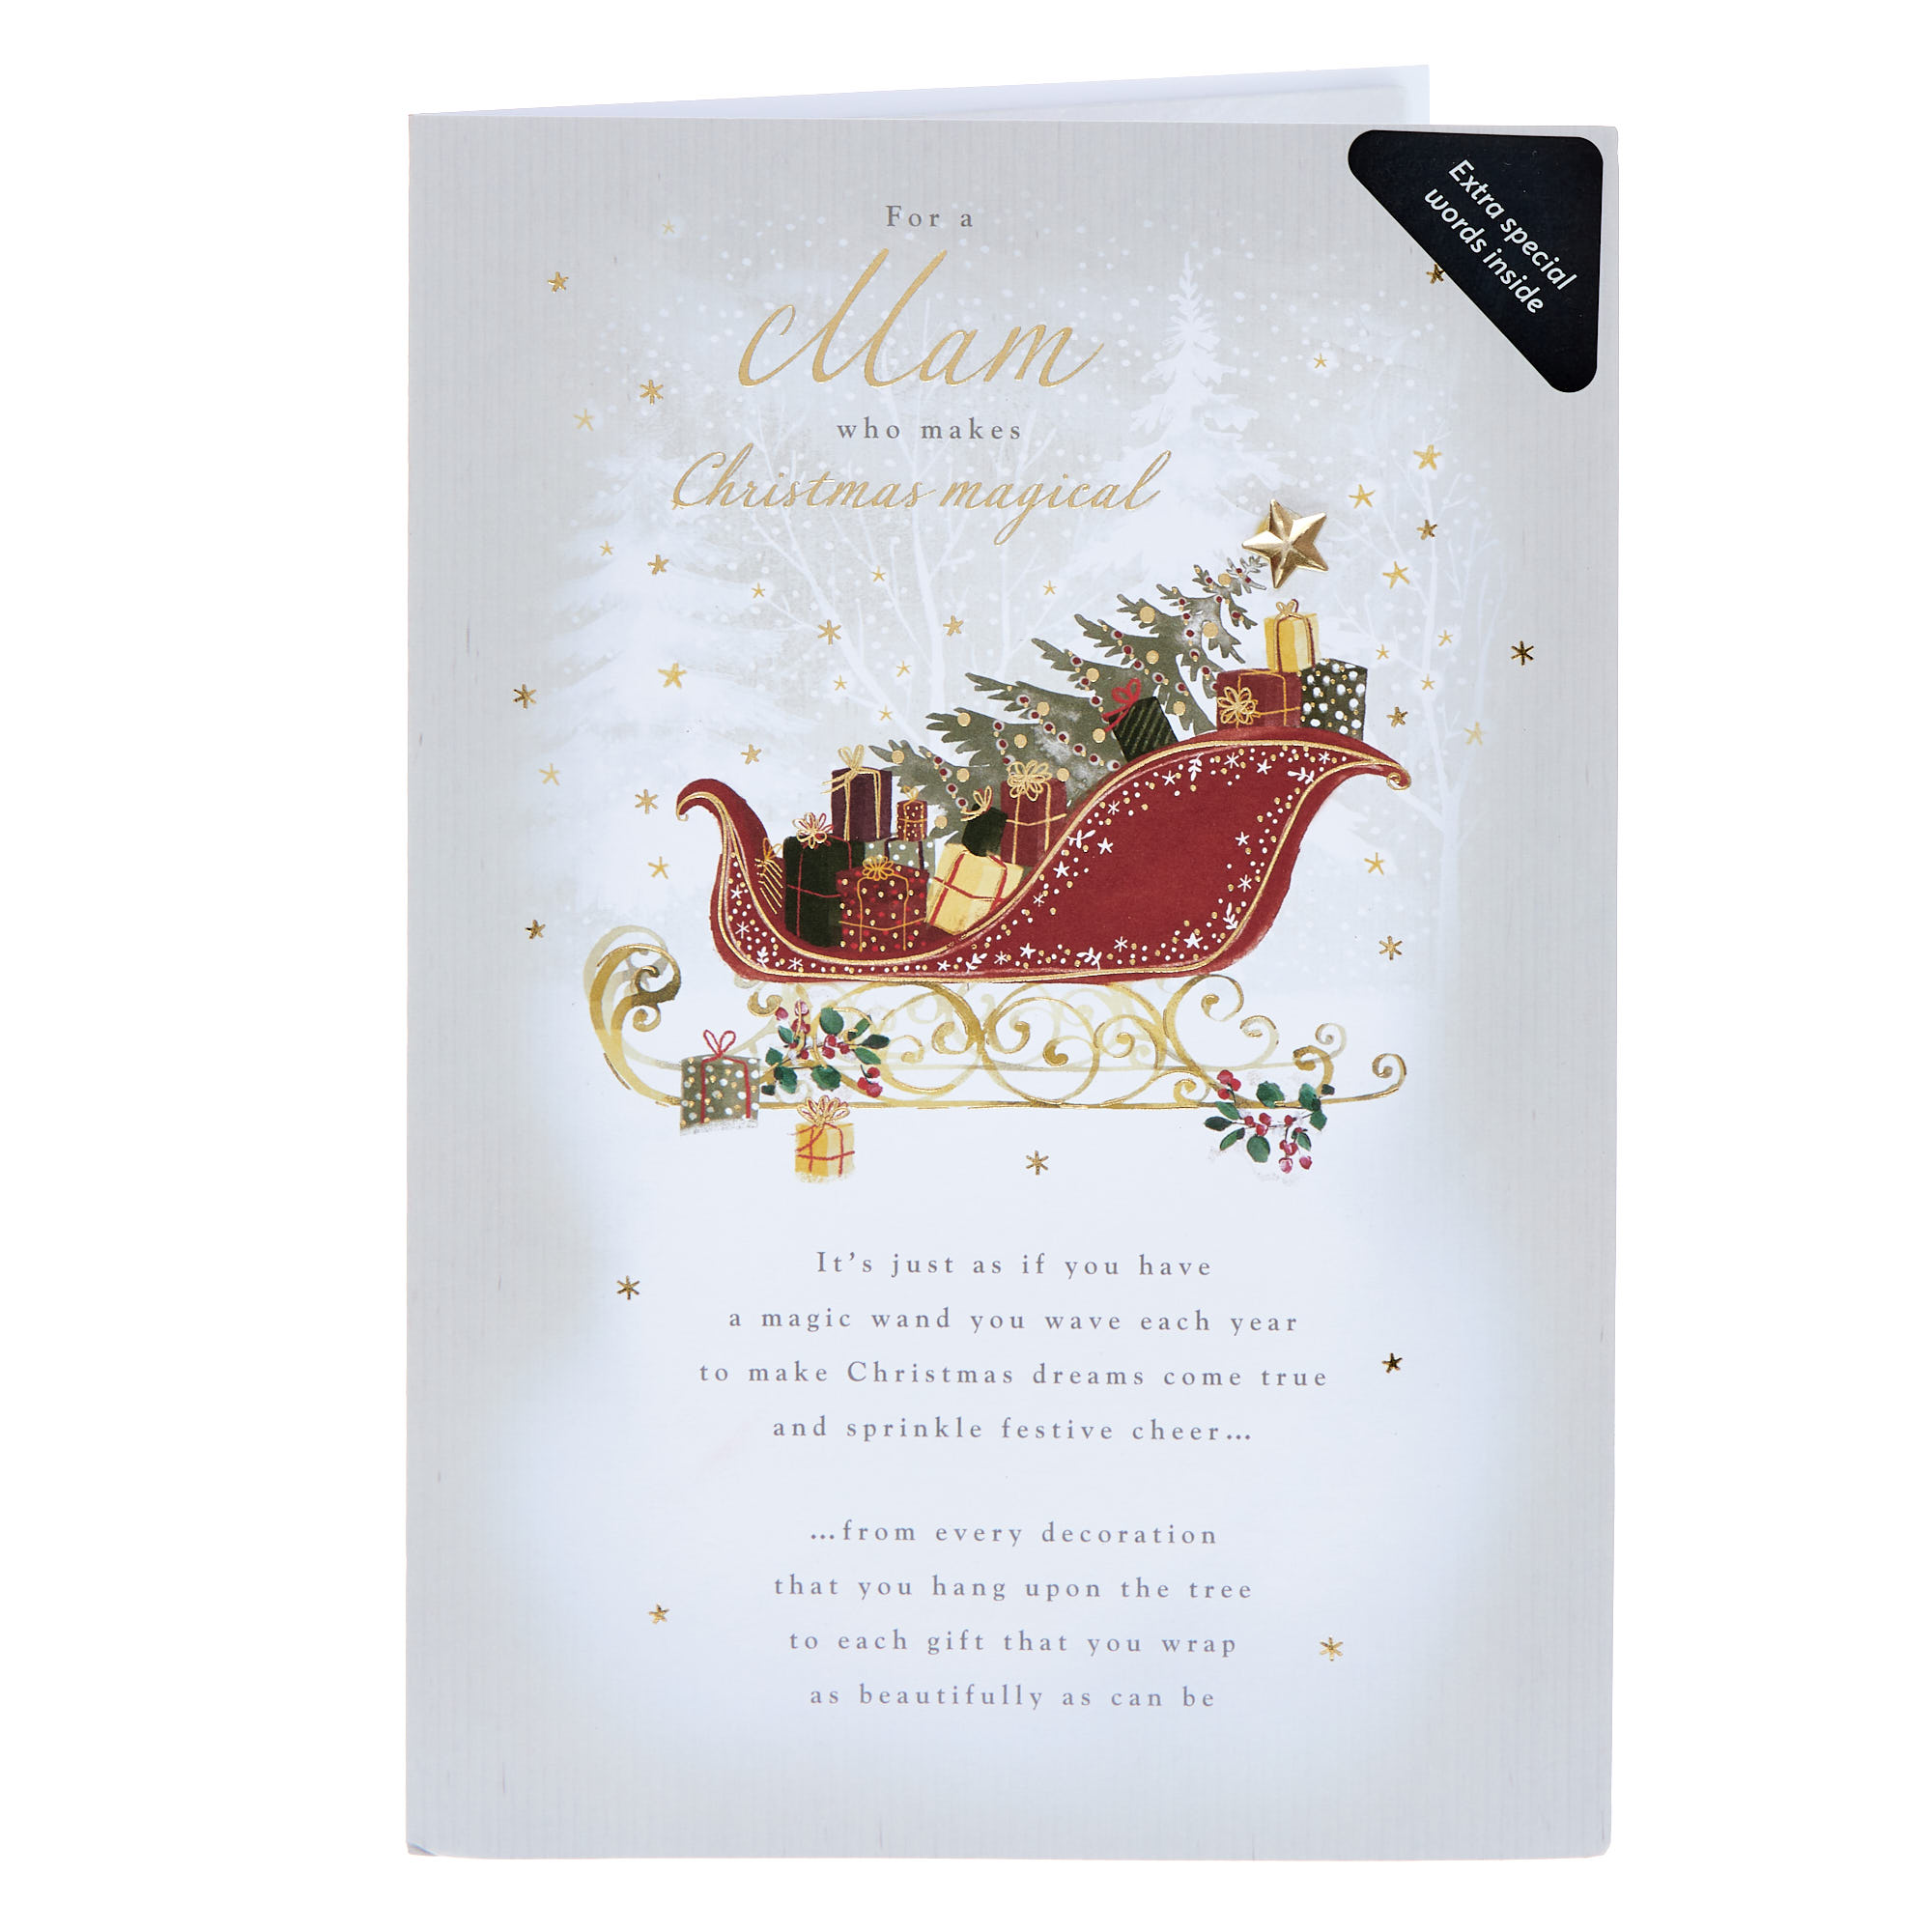 Mam Red Sleigh Christmas Card - Extra-Special Words Inside!